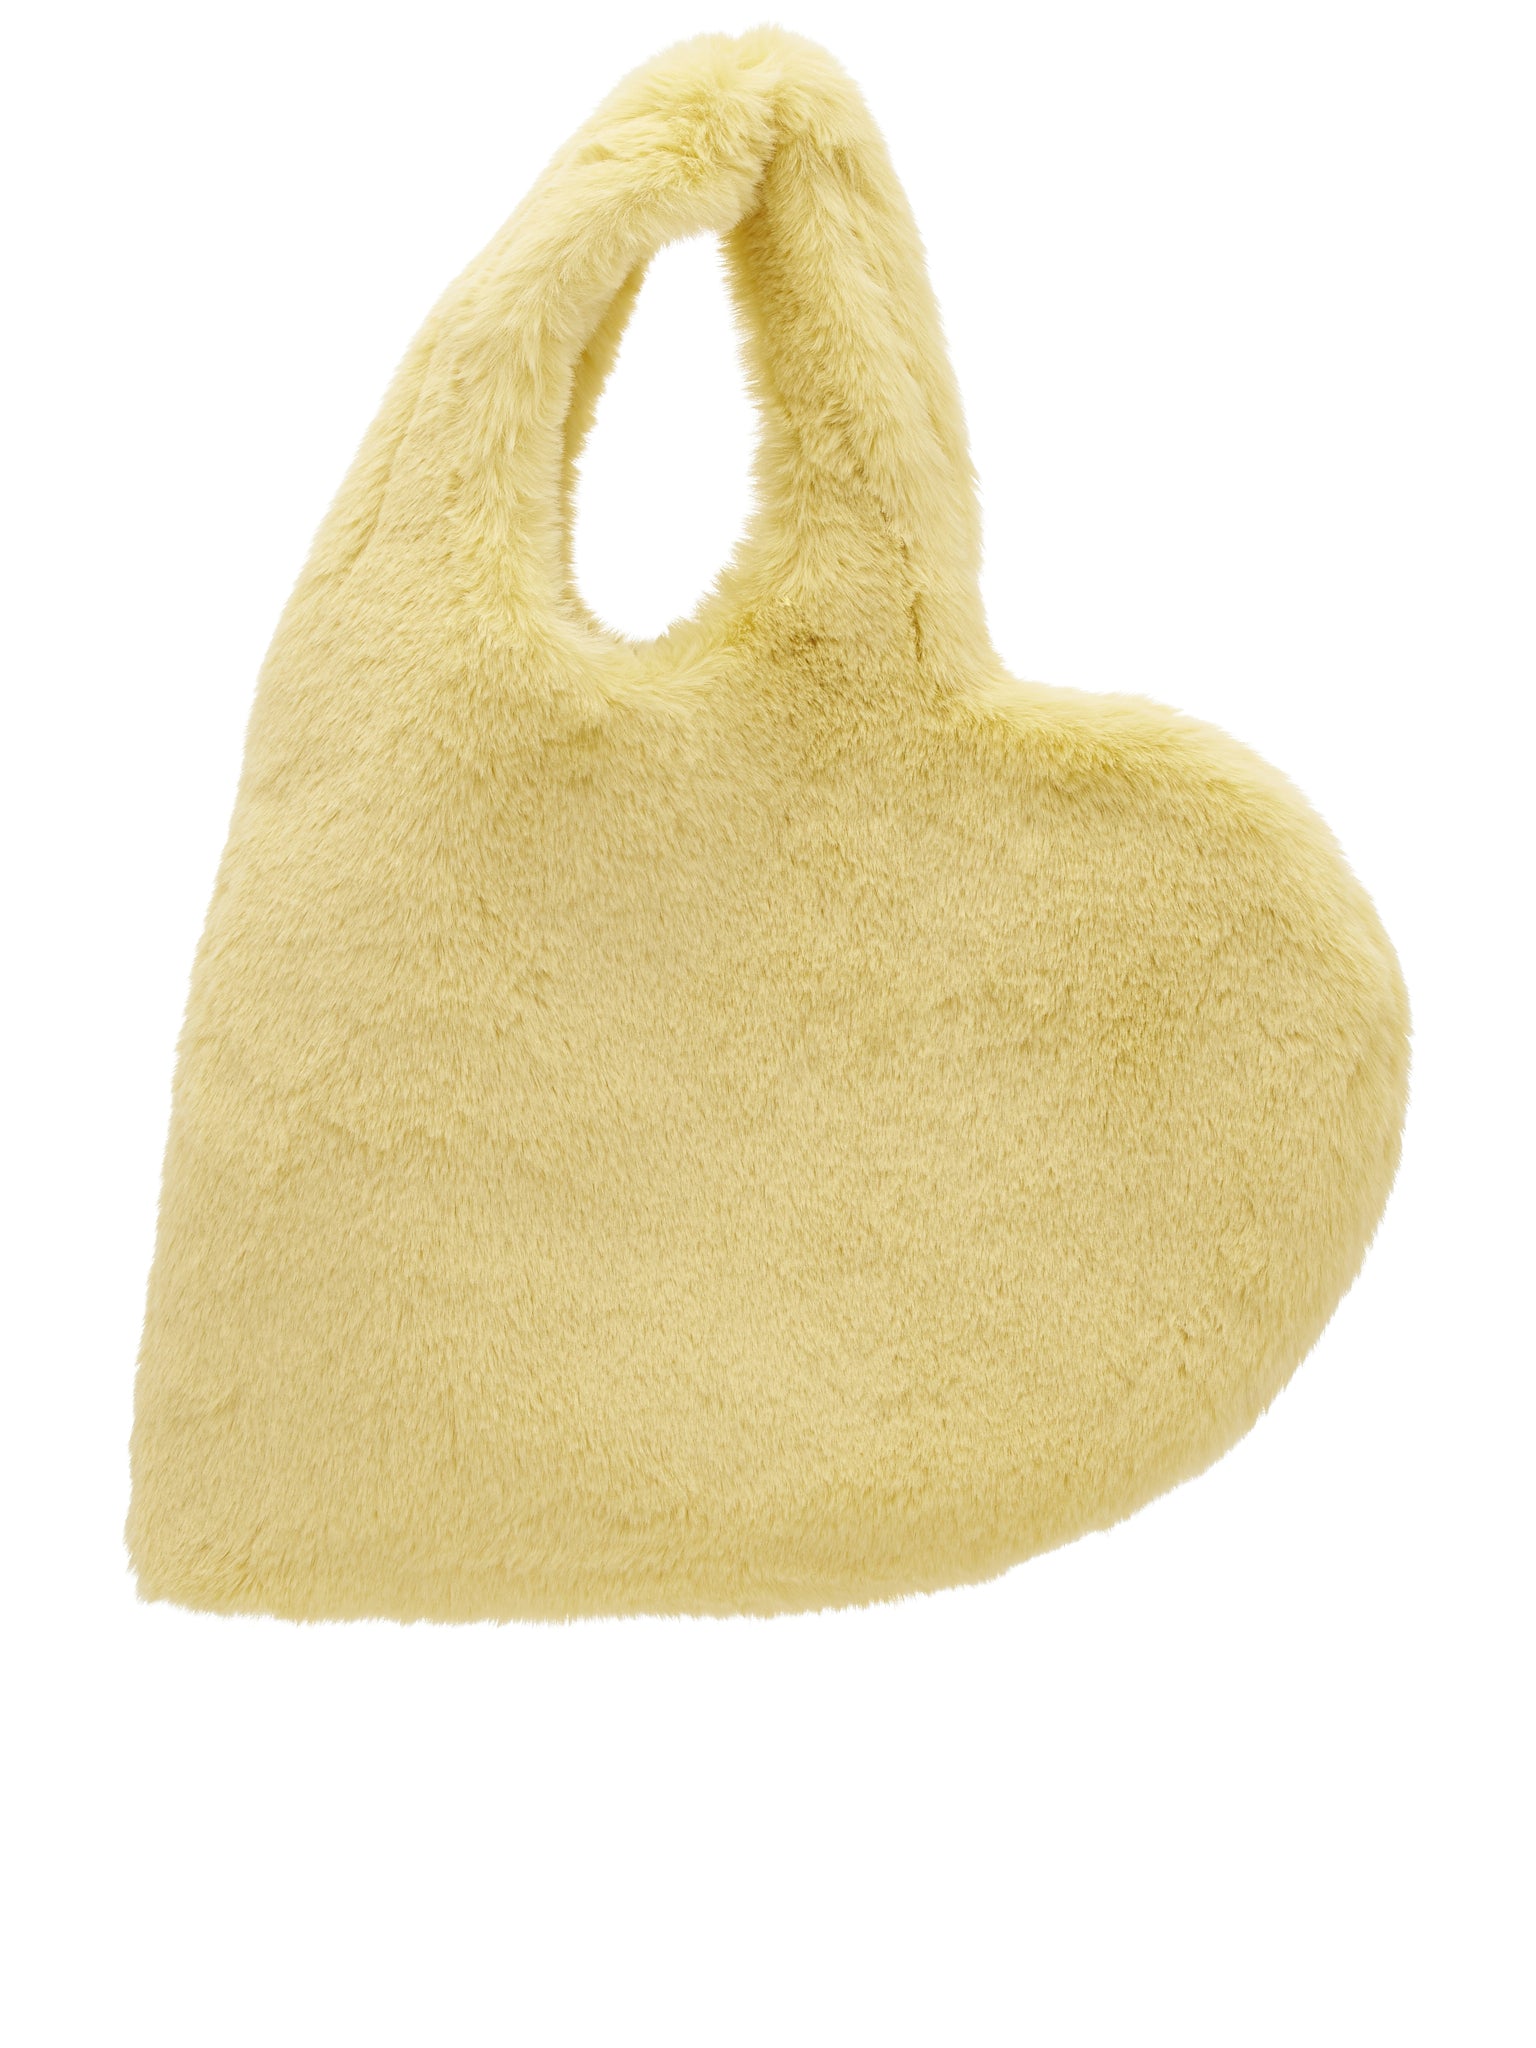 Heart Tote Bag (COPBA14276-YELLOW)